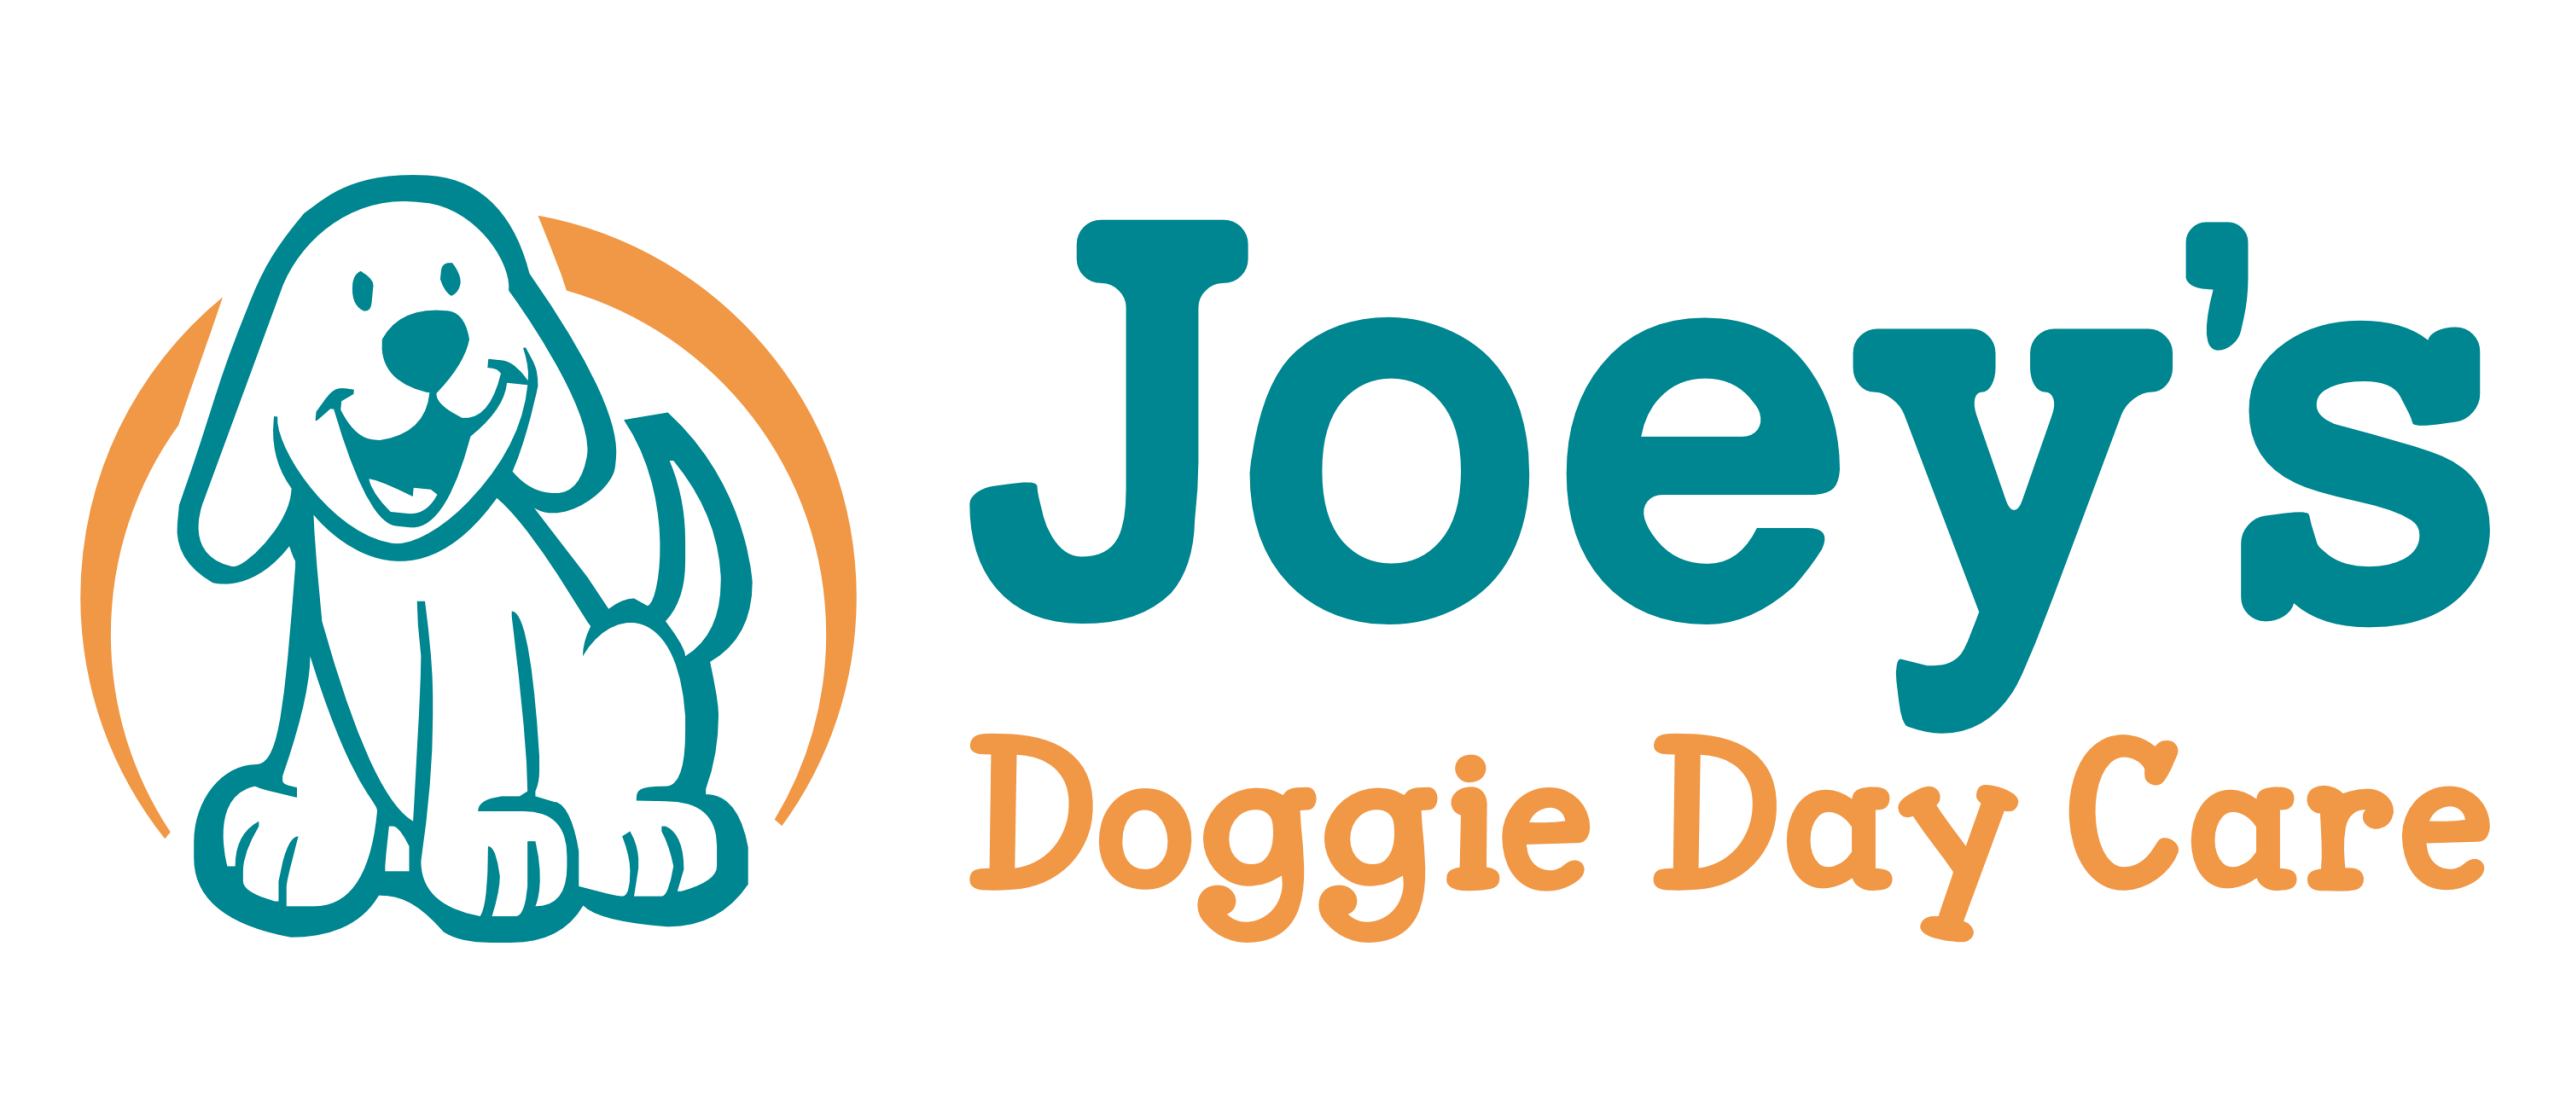 Joey's Doggie Day Care